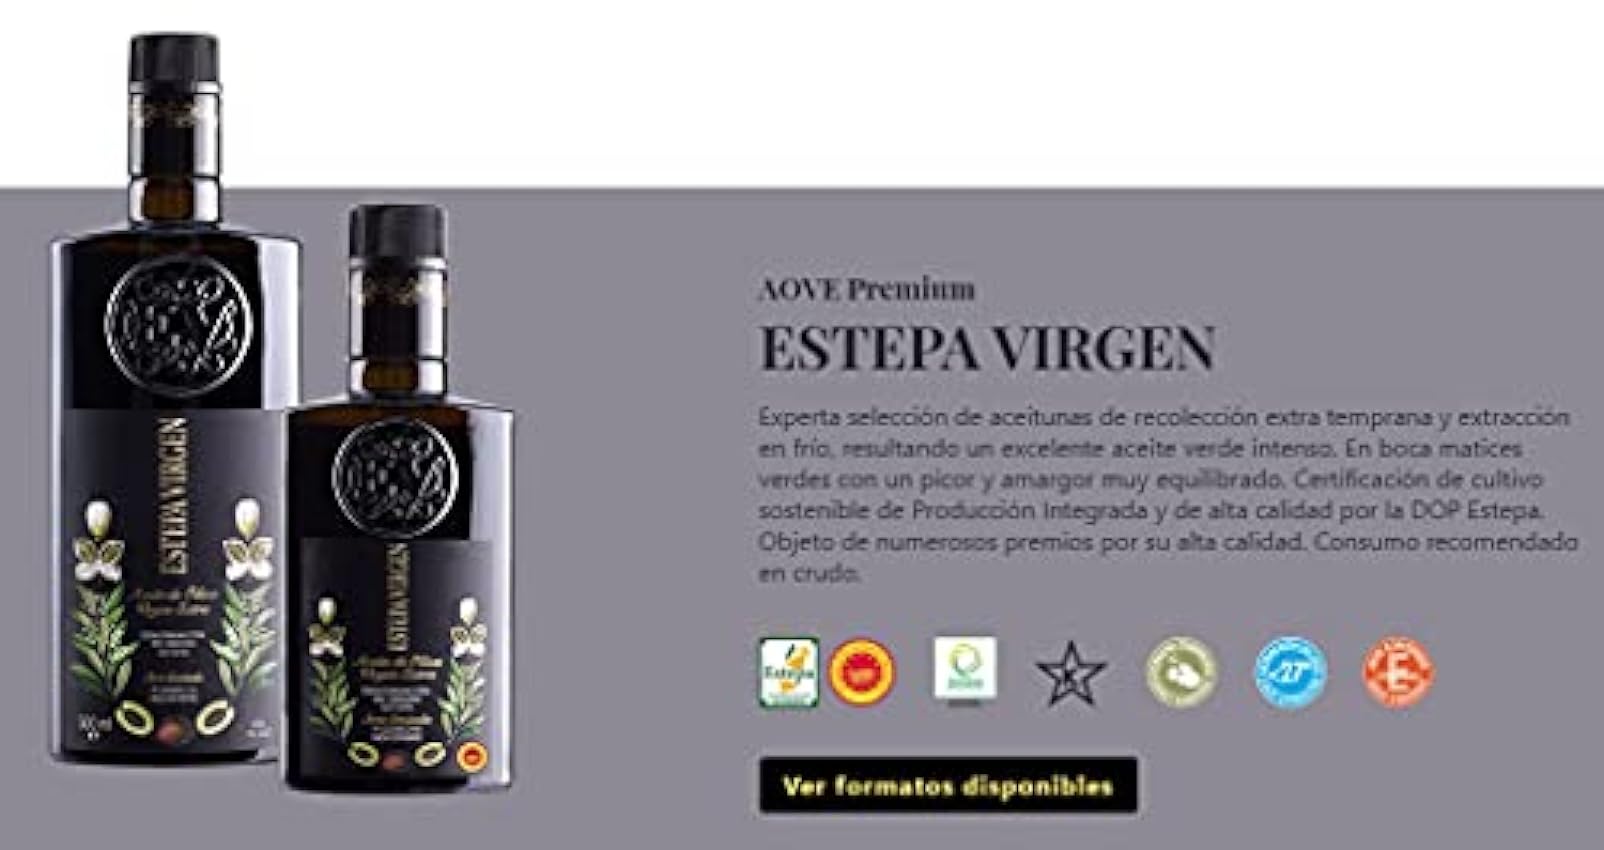 ESTEPA VIRGEN - Aceite de Oliva Virgen Extra Premium Oleoestepa - Estuche Botella 500 ml hBnYnWty